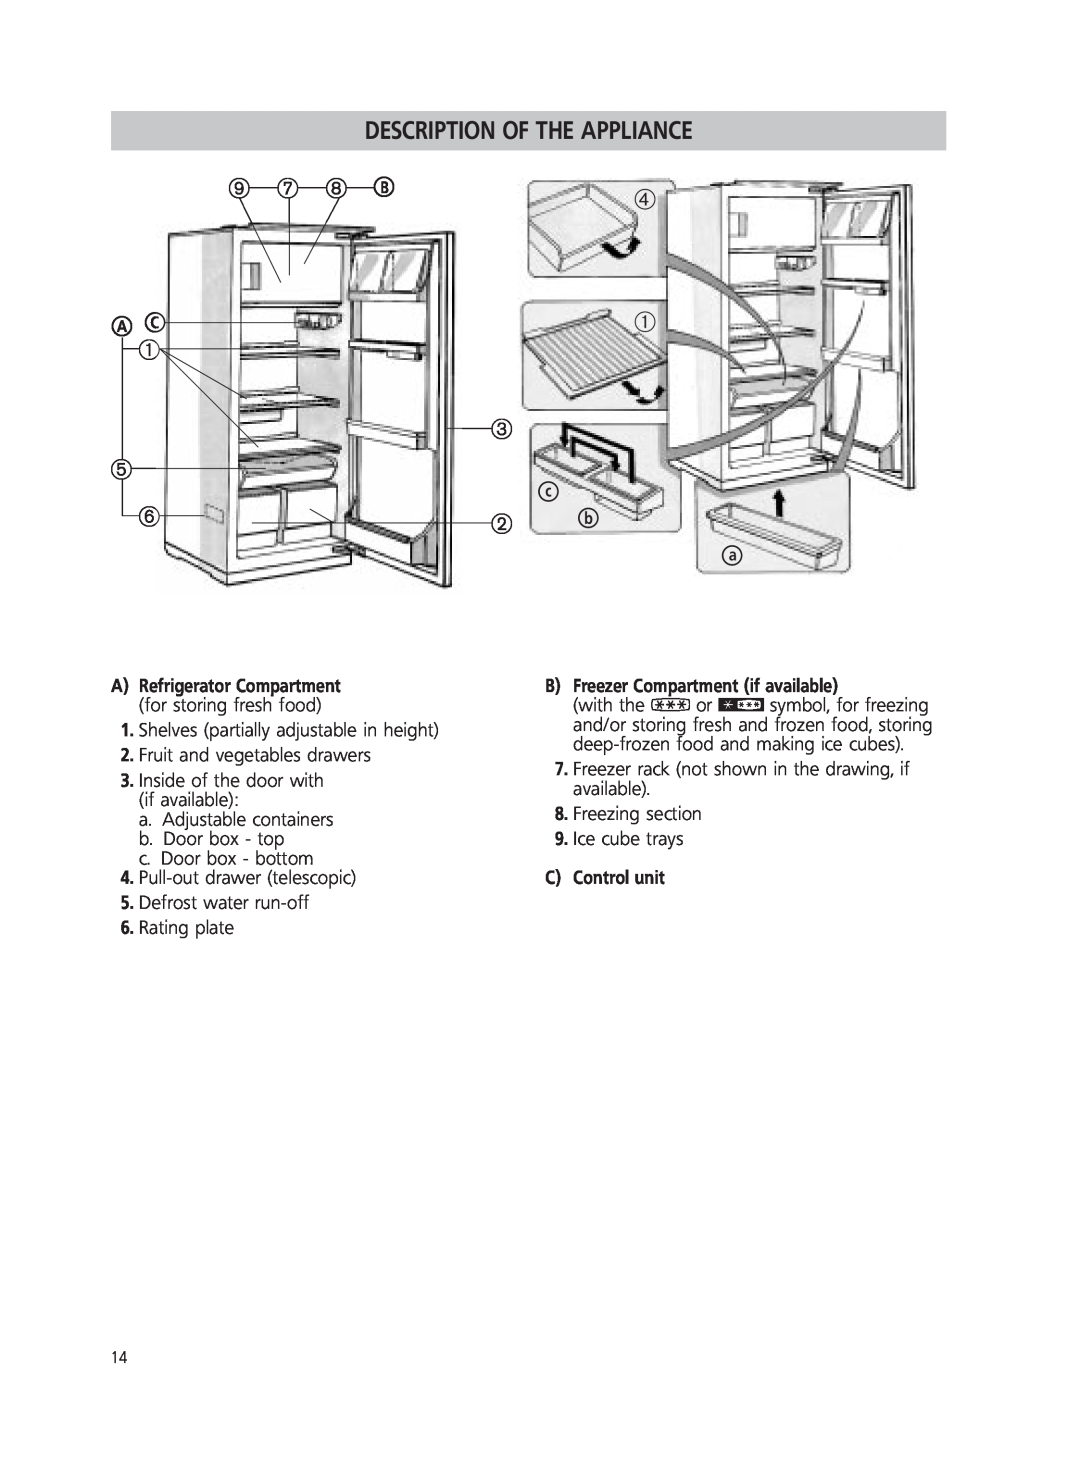 Smeg FR205A manual q e t Xc zw Xb Xa, B Freezer Compartment if available, C Control unit, Description Of The Appliance 